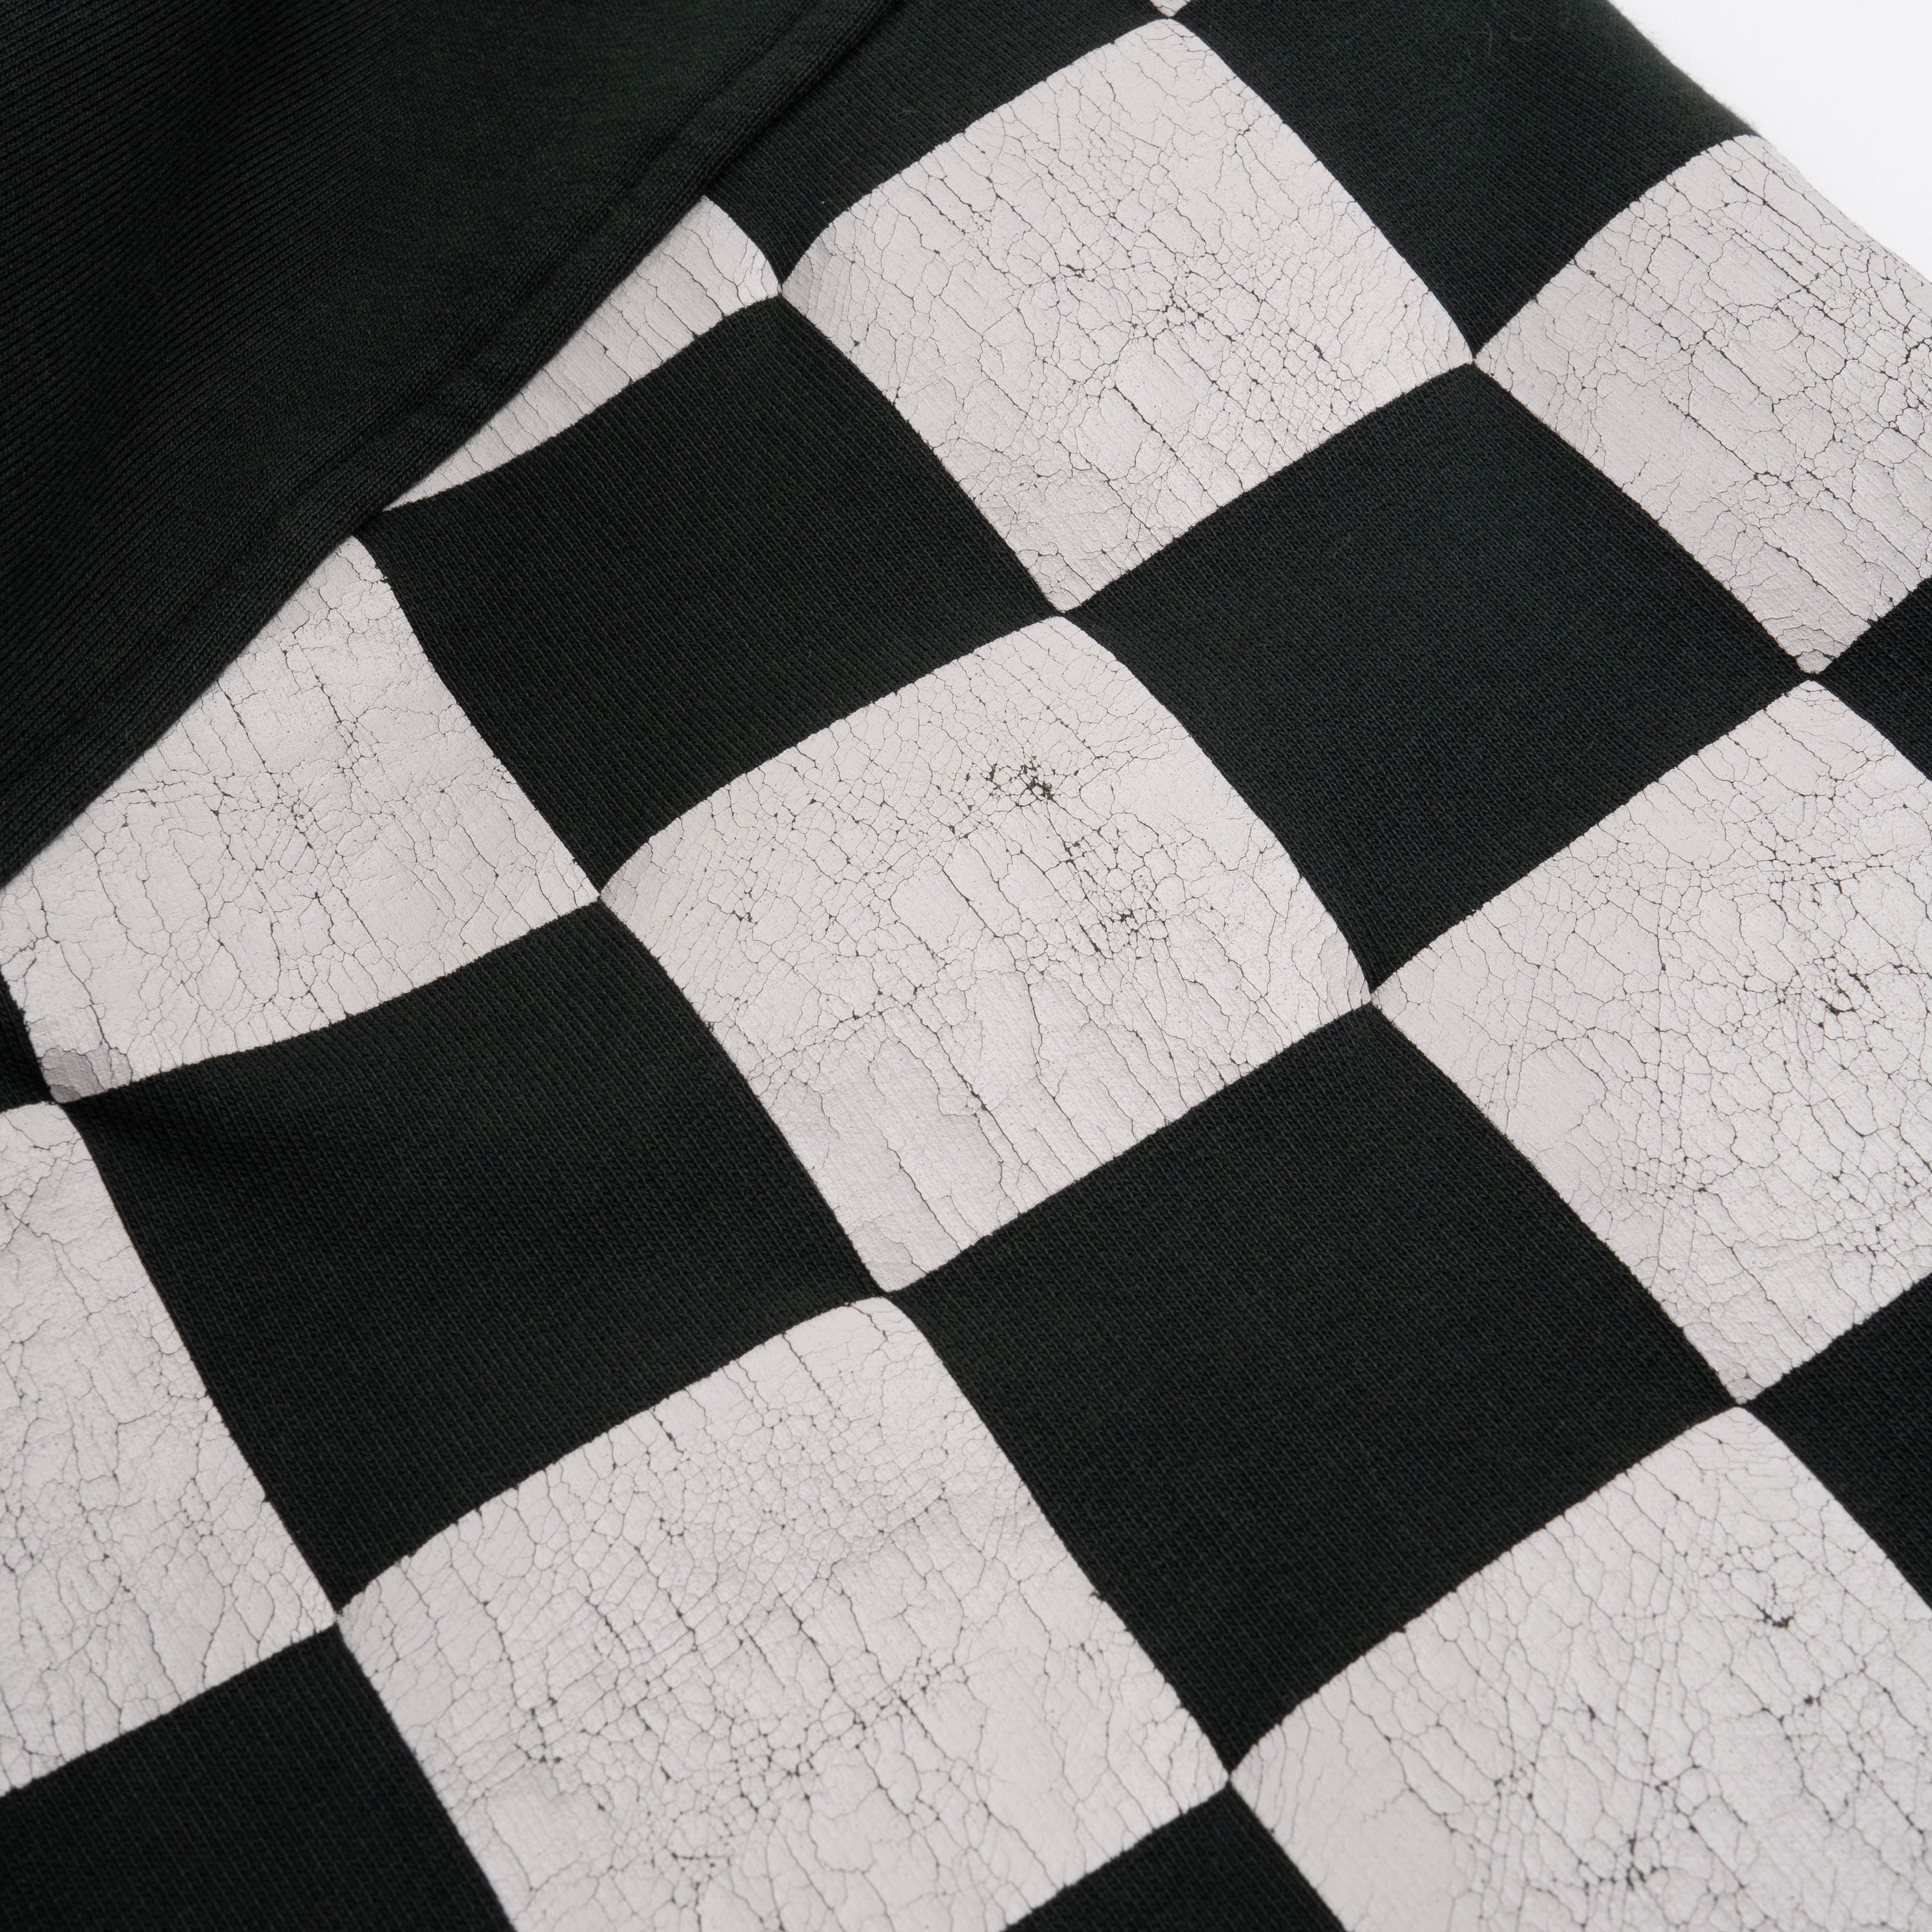 Venice Checker Sleeve Hoodie Black ERL08T021